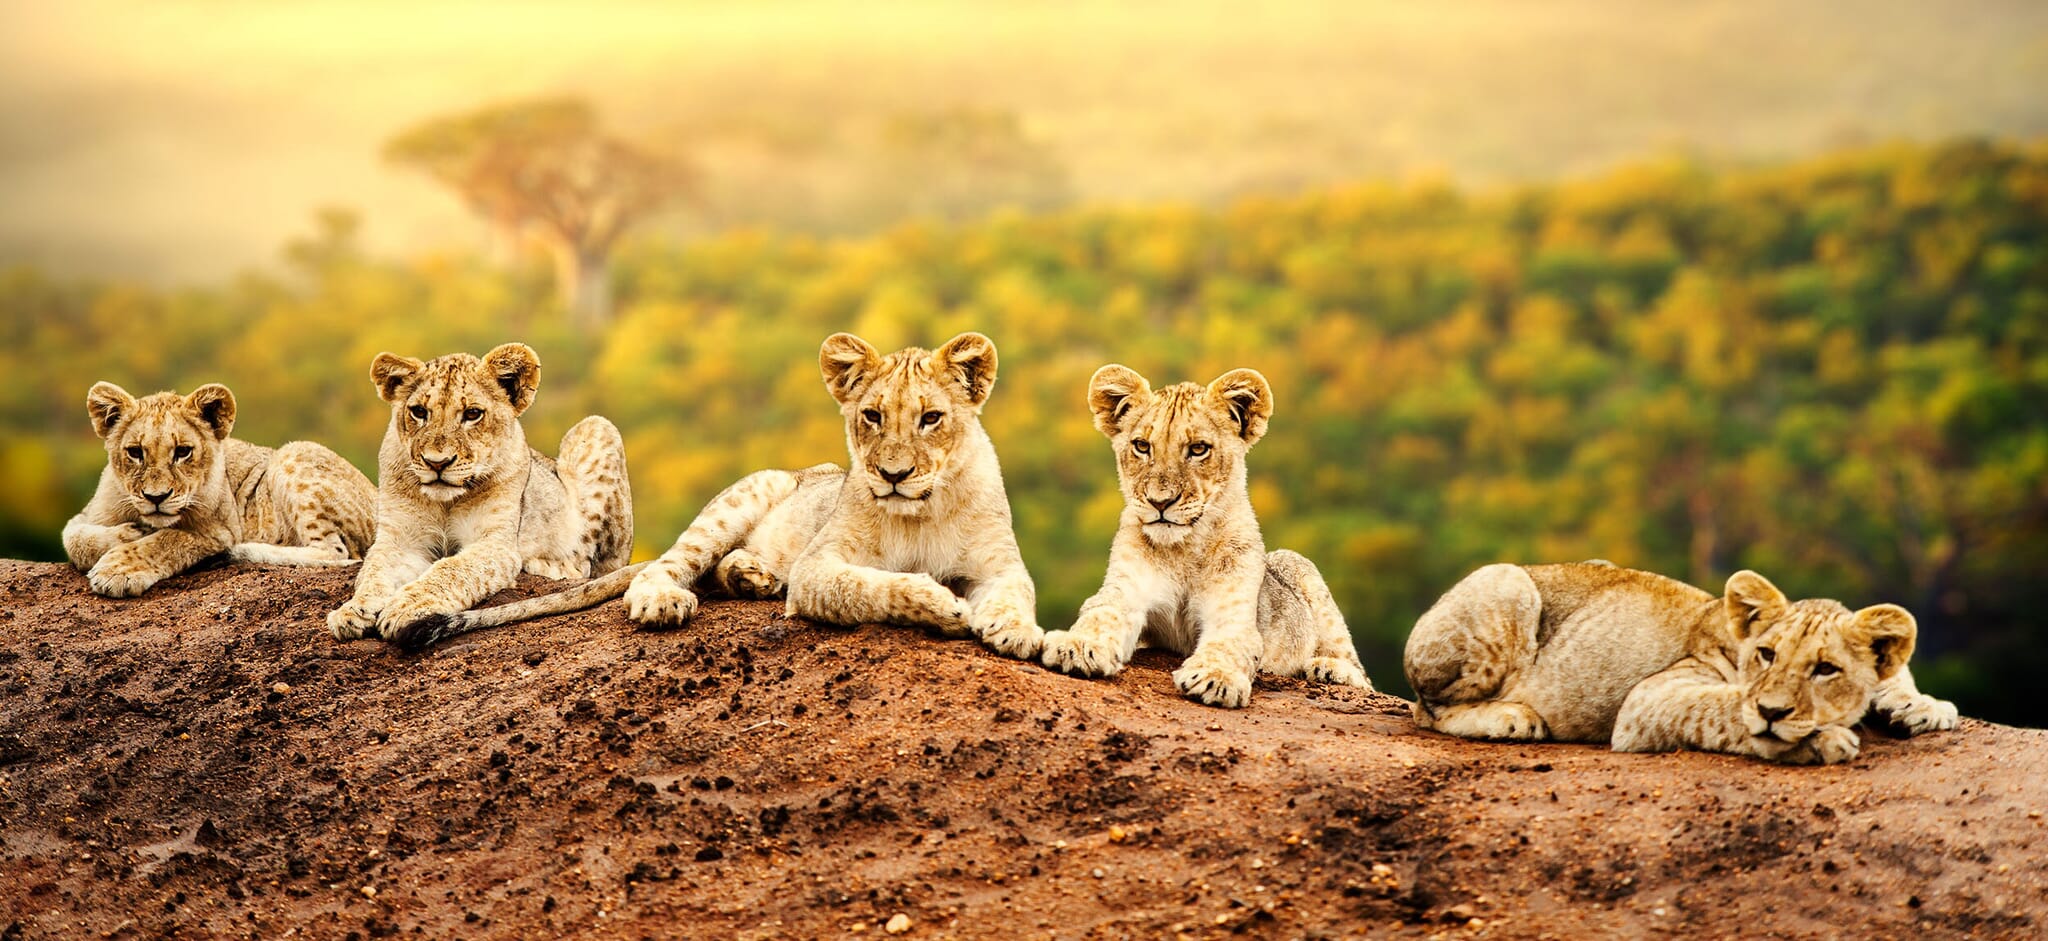 East Africa big five lions sunrise family safari